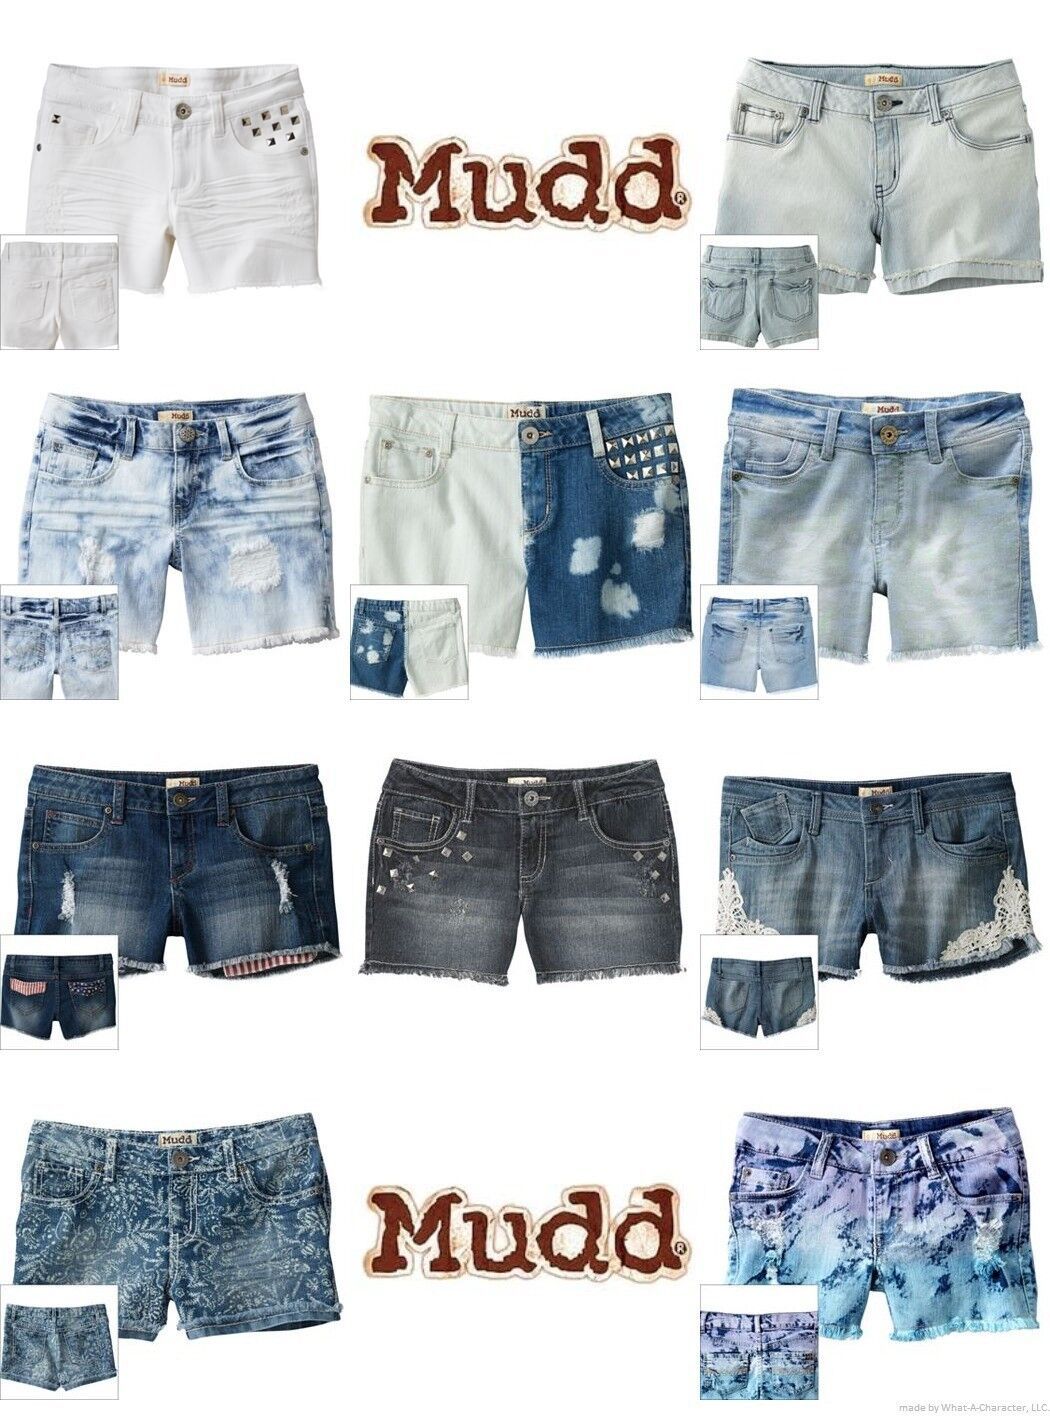 Blowout Prezzo Mudd Moda Jeans Pantaloncini Ragazze Reg. & Taglie Comode 7-16 - £6.99 GBP - £8.42 GBP